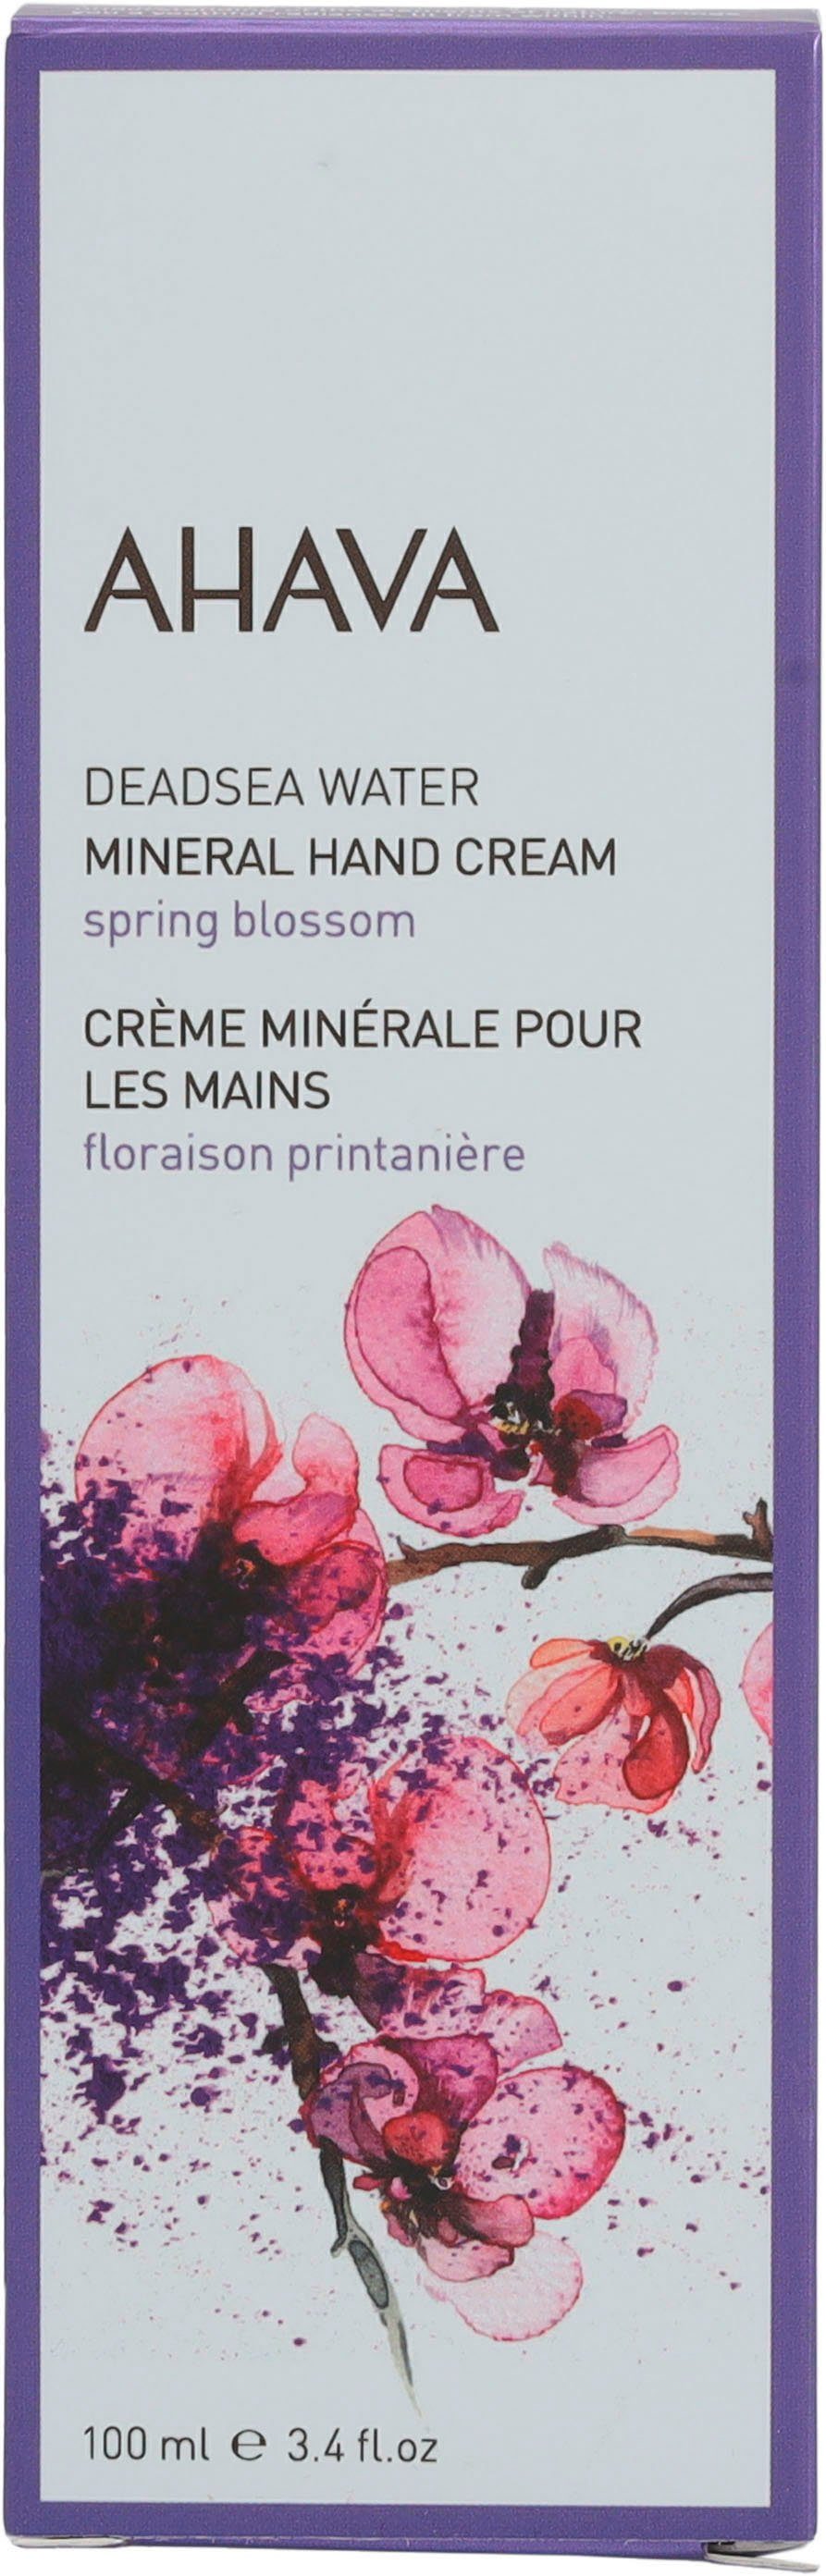 Water Deadsea AHAVA Cream Mineral Handcreme Blossom Spring Hand